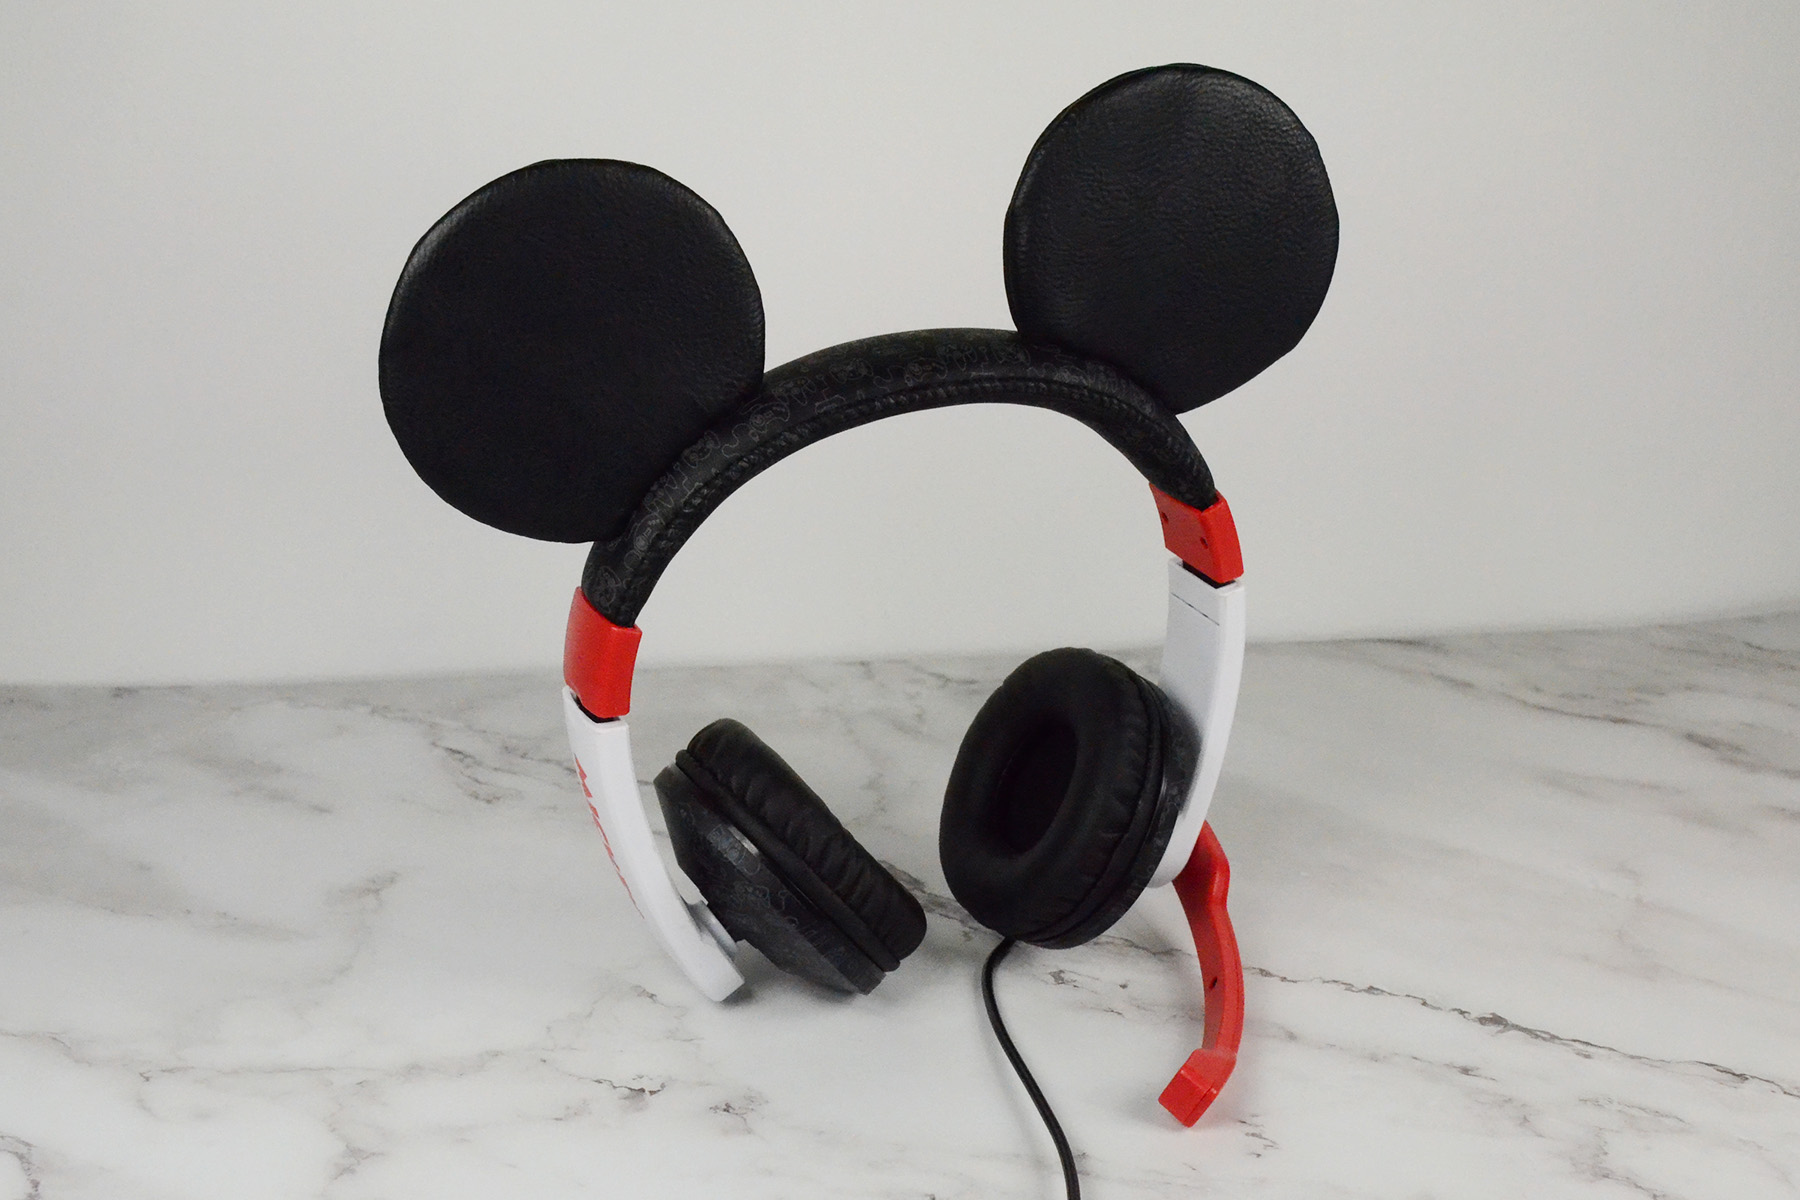 mickey mouse headphones